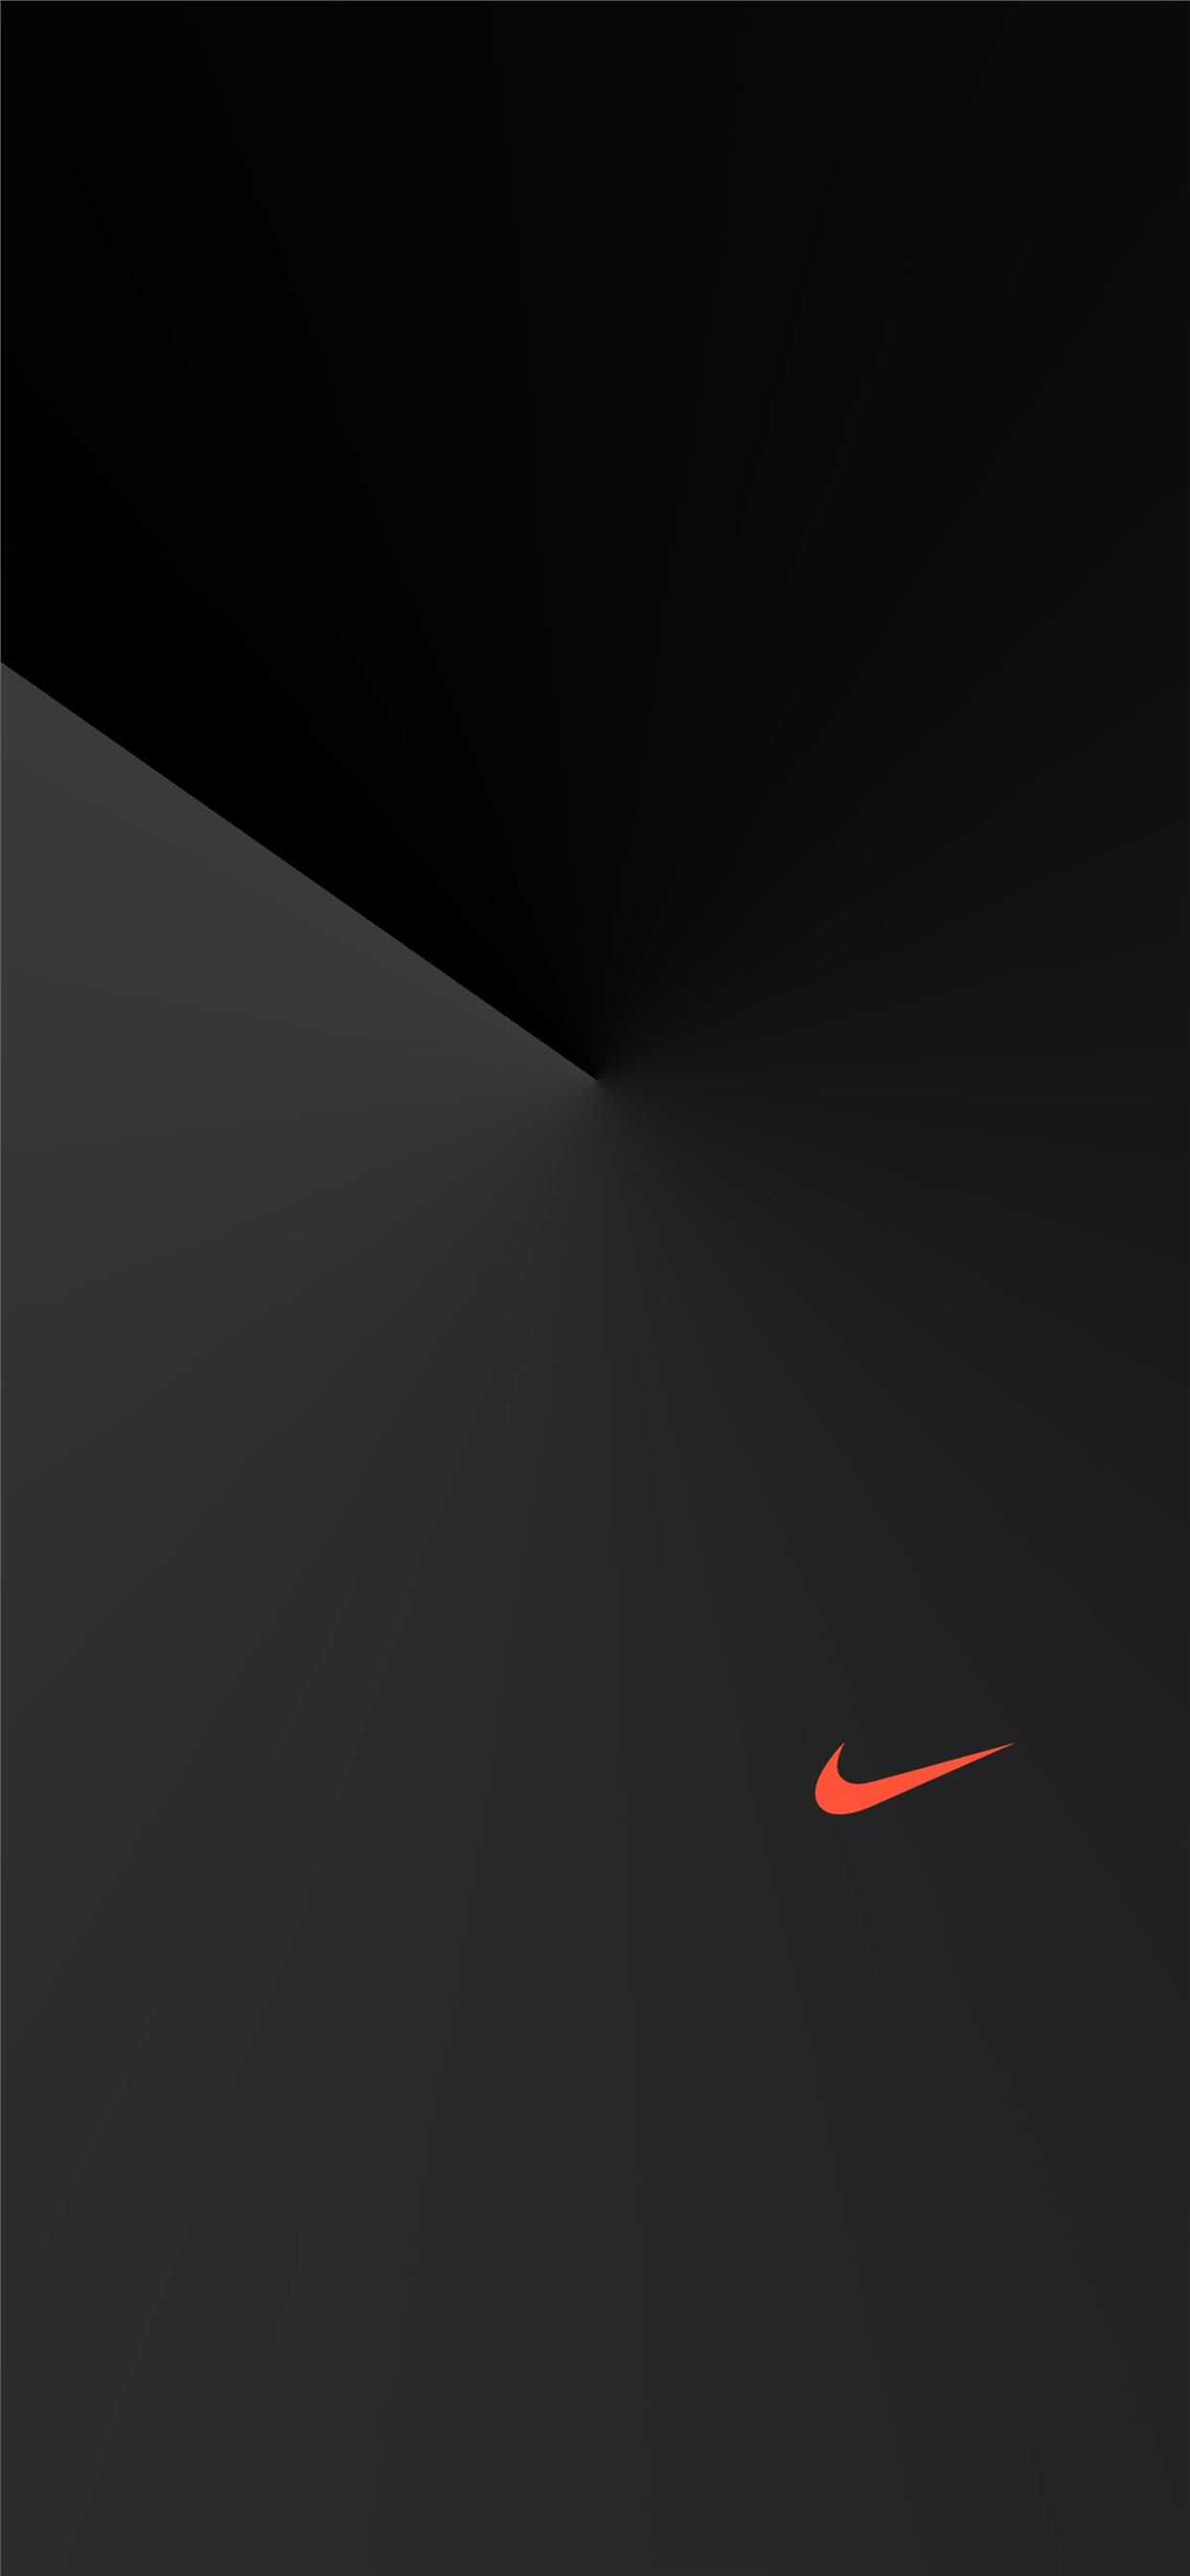 1242x2688 Nike Dark iPhone Wallpapers Free Download